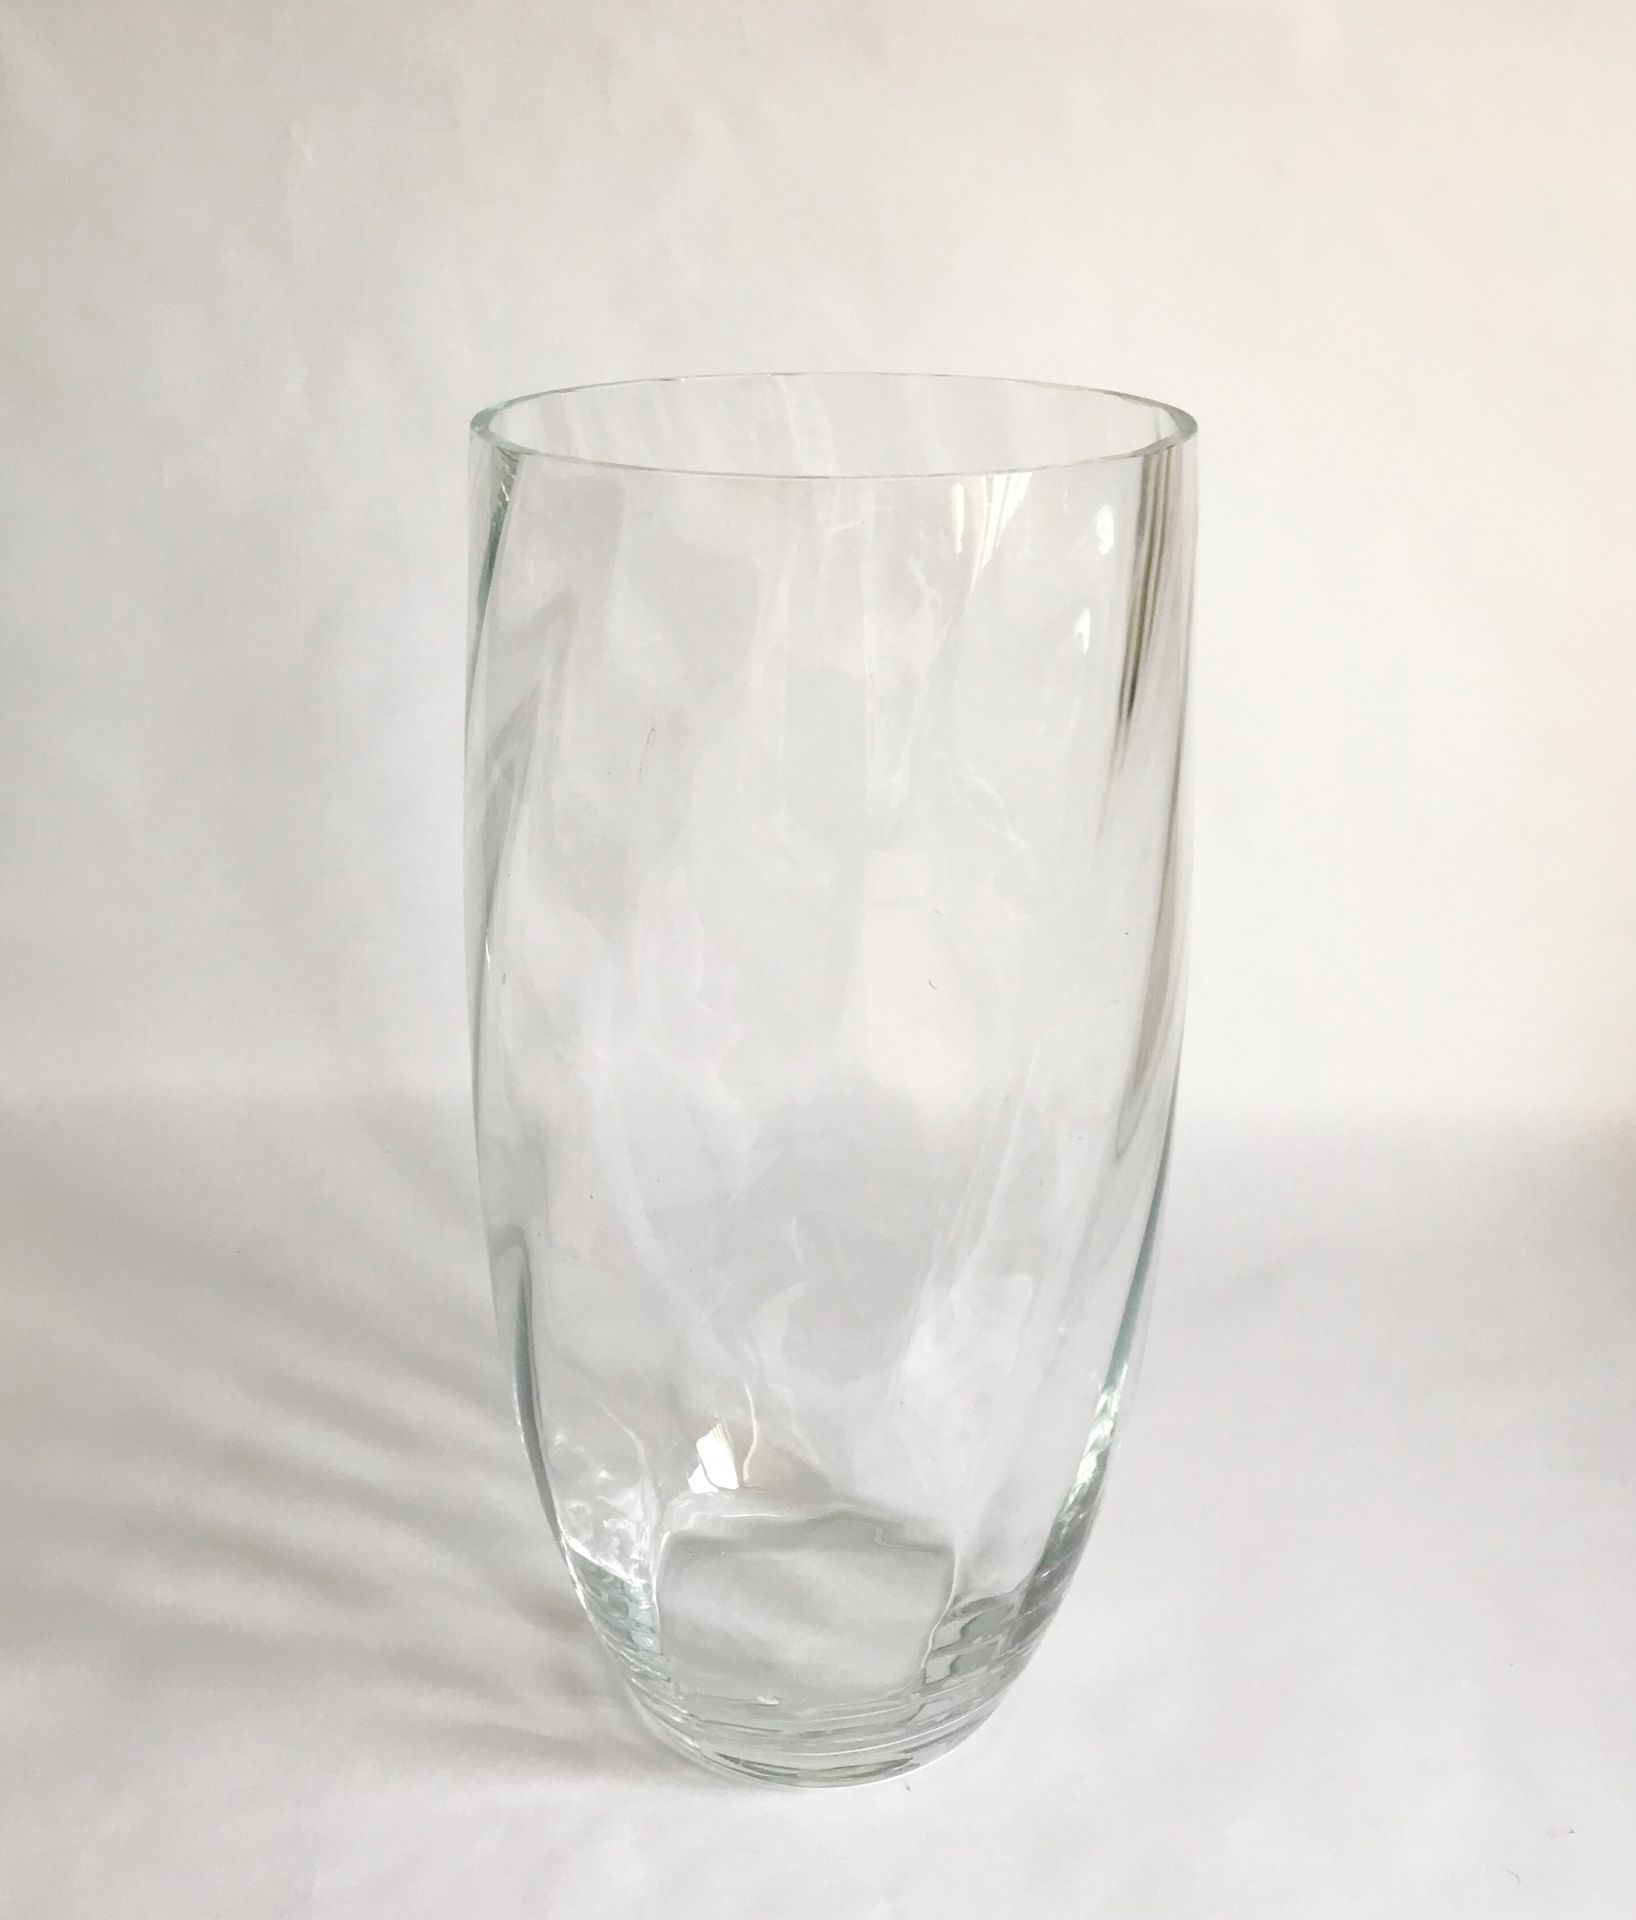 Null 一个扭曲的吹制玻璃的大圆柱形花瓶。

H.40厘米